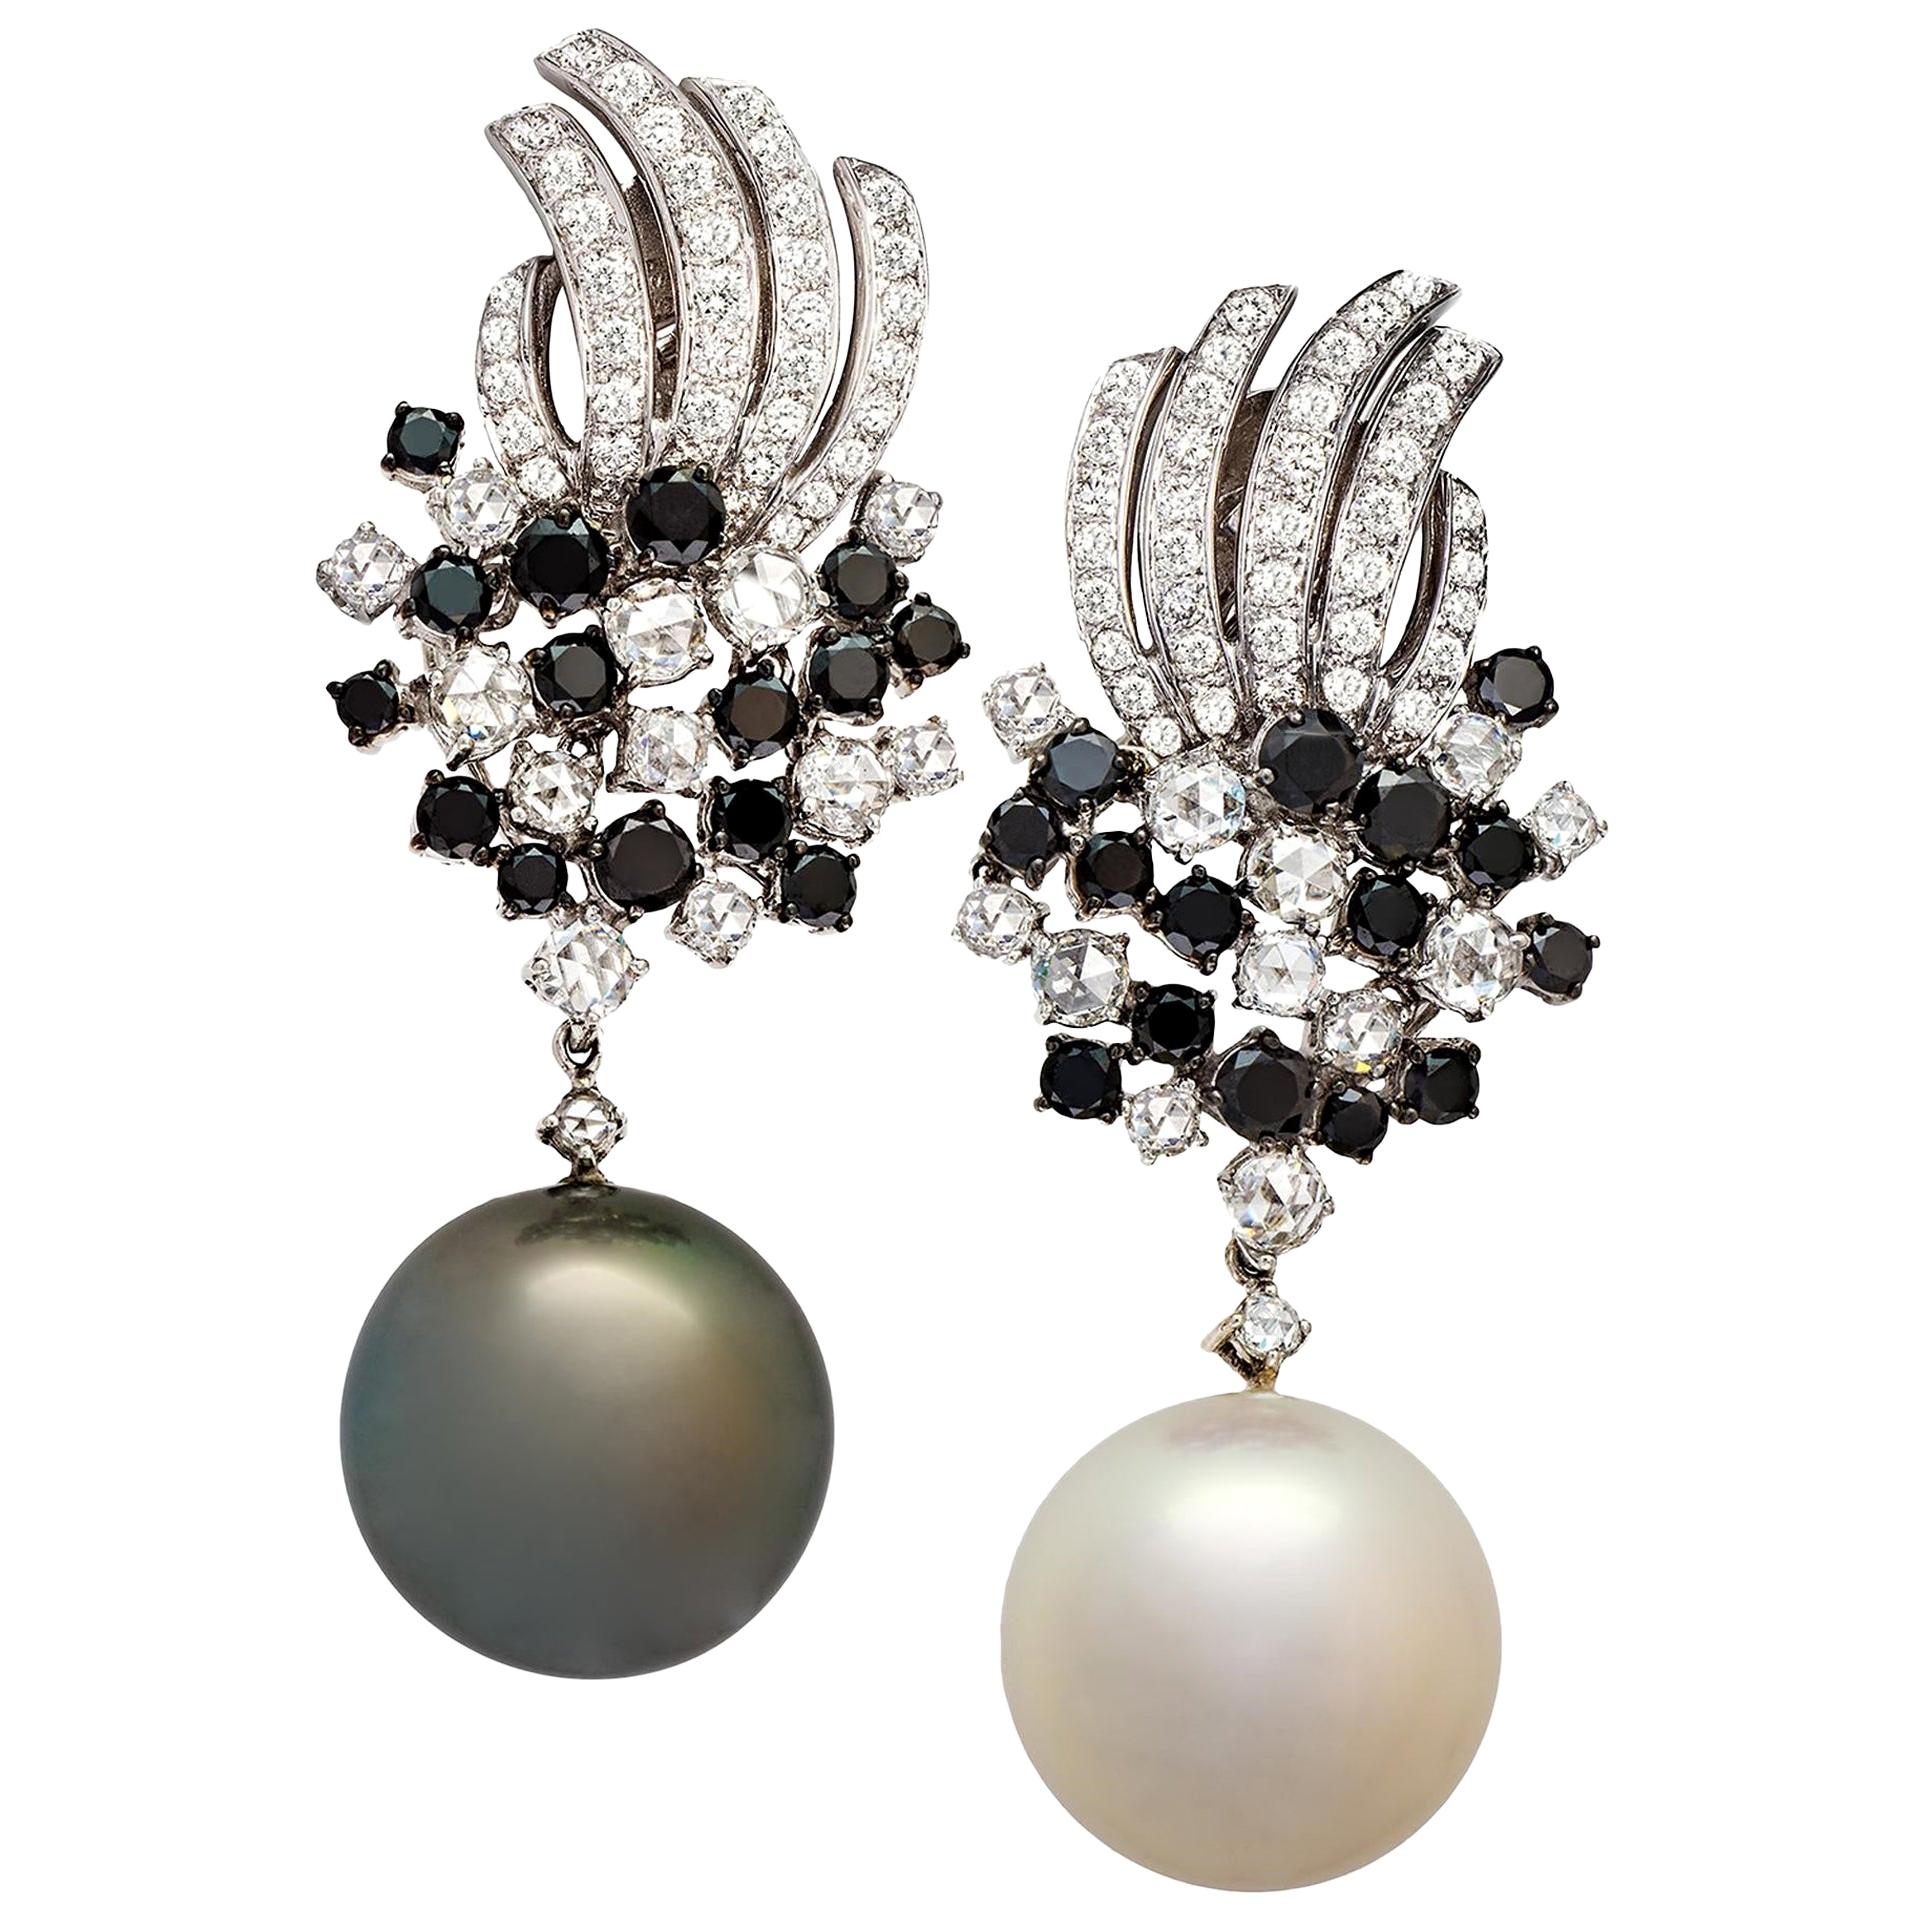 Margot McKinney 18 Karat Gold Earrings with White/Black Diamonds, Pearl Drops